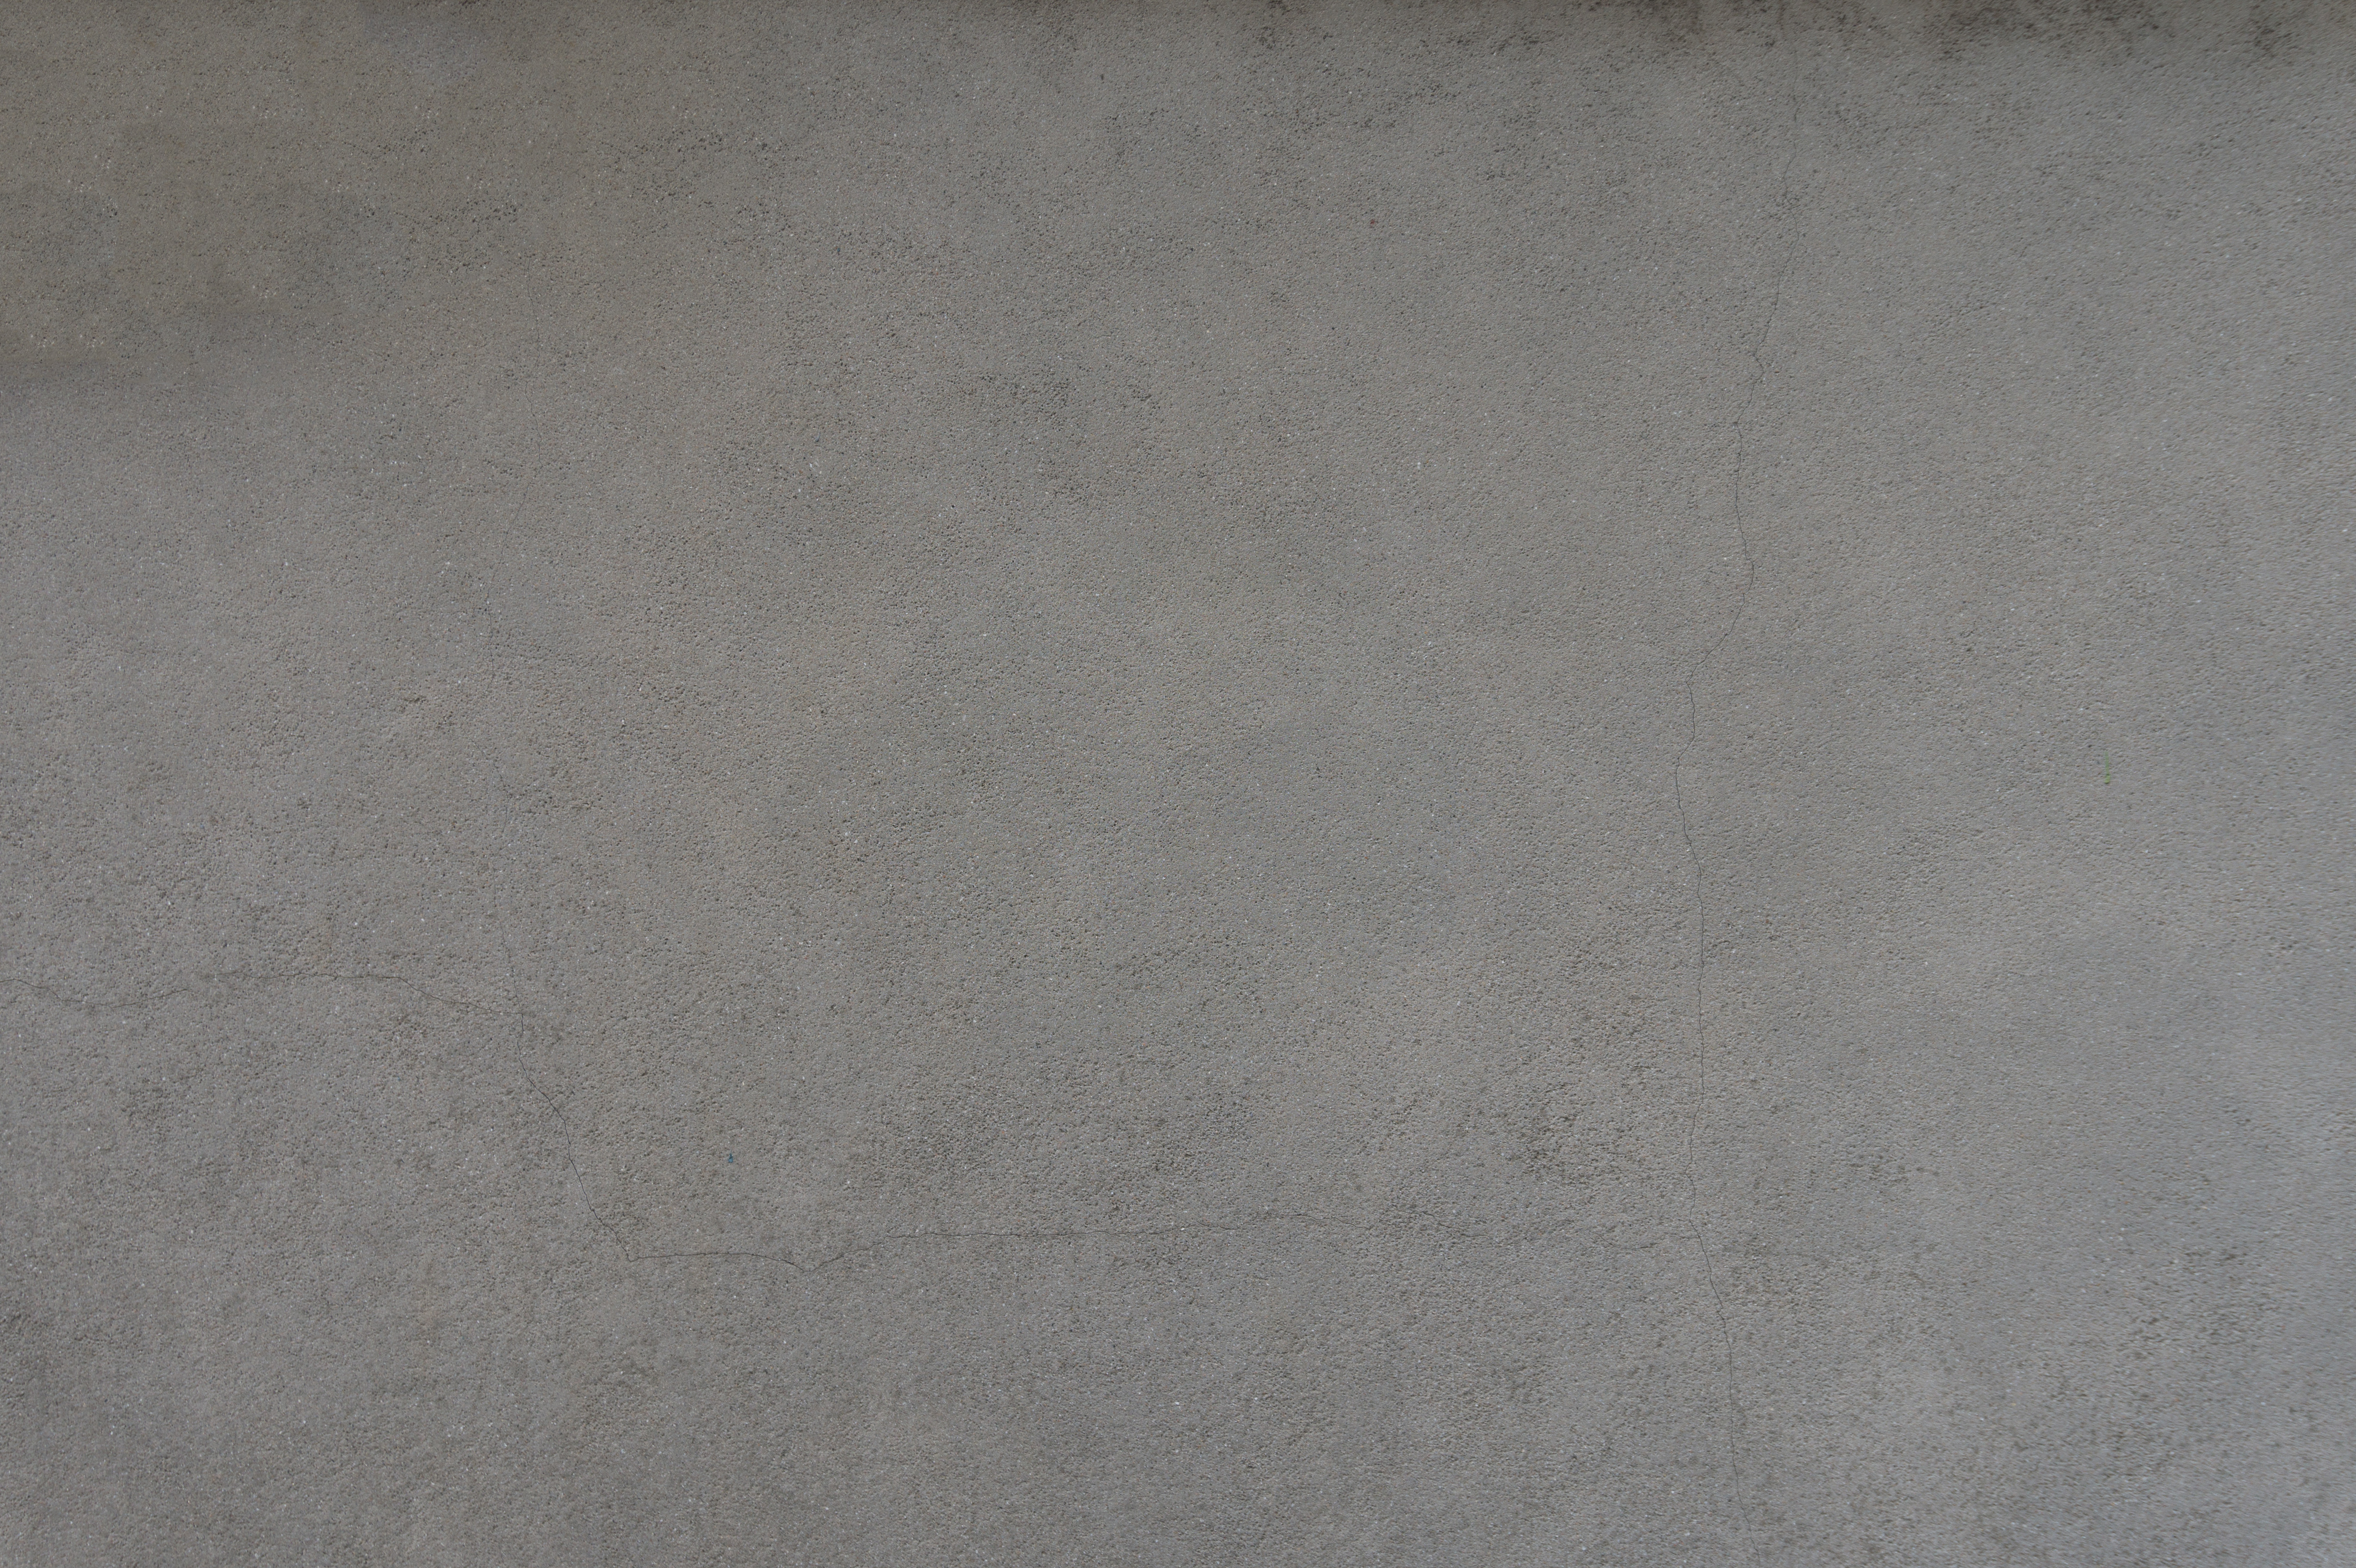 Concrete wall-007 - Concrete - Texturify - Free textures